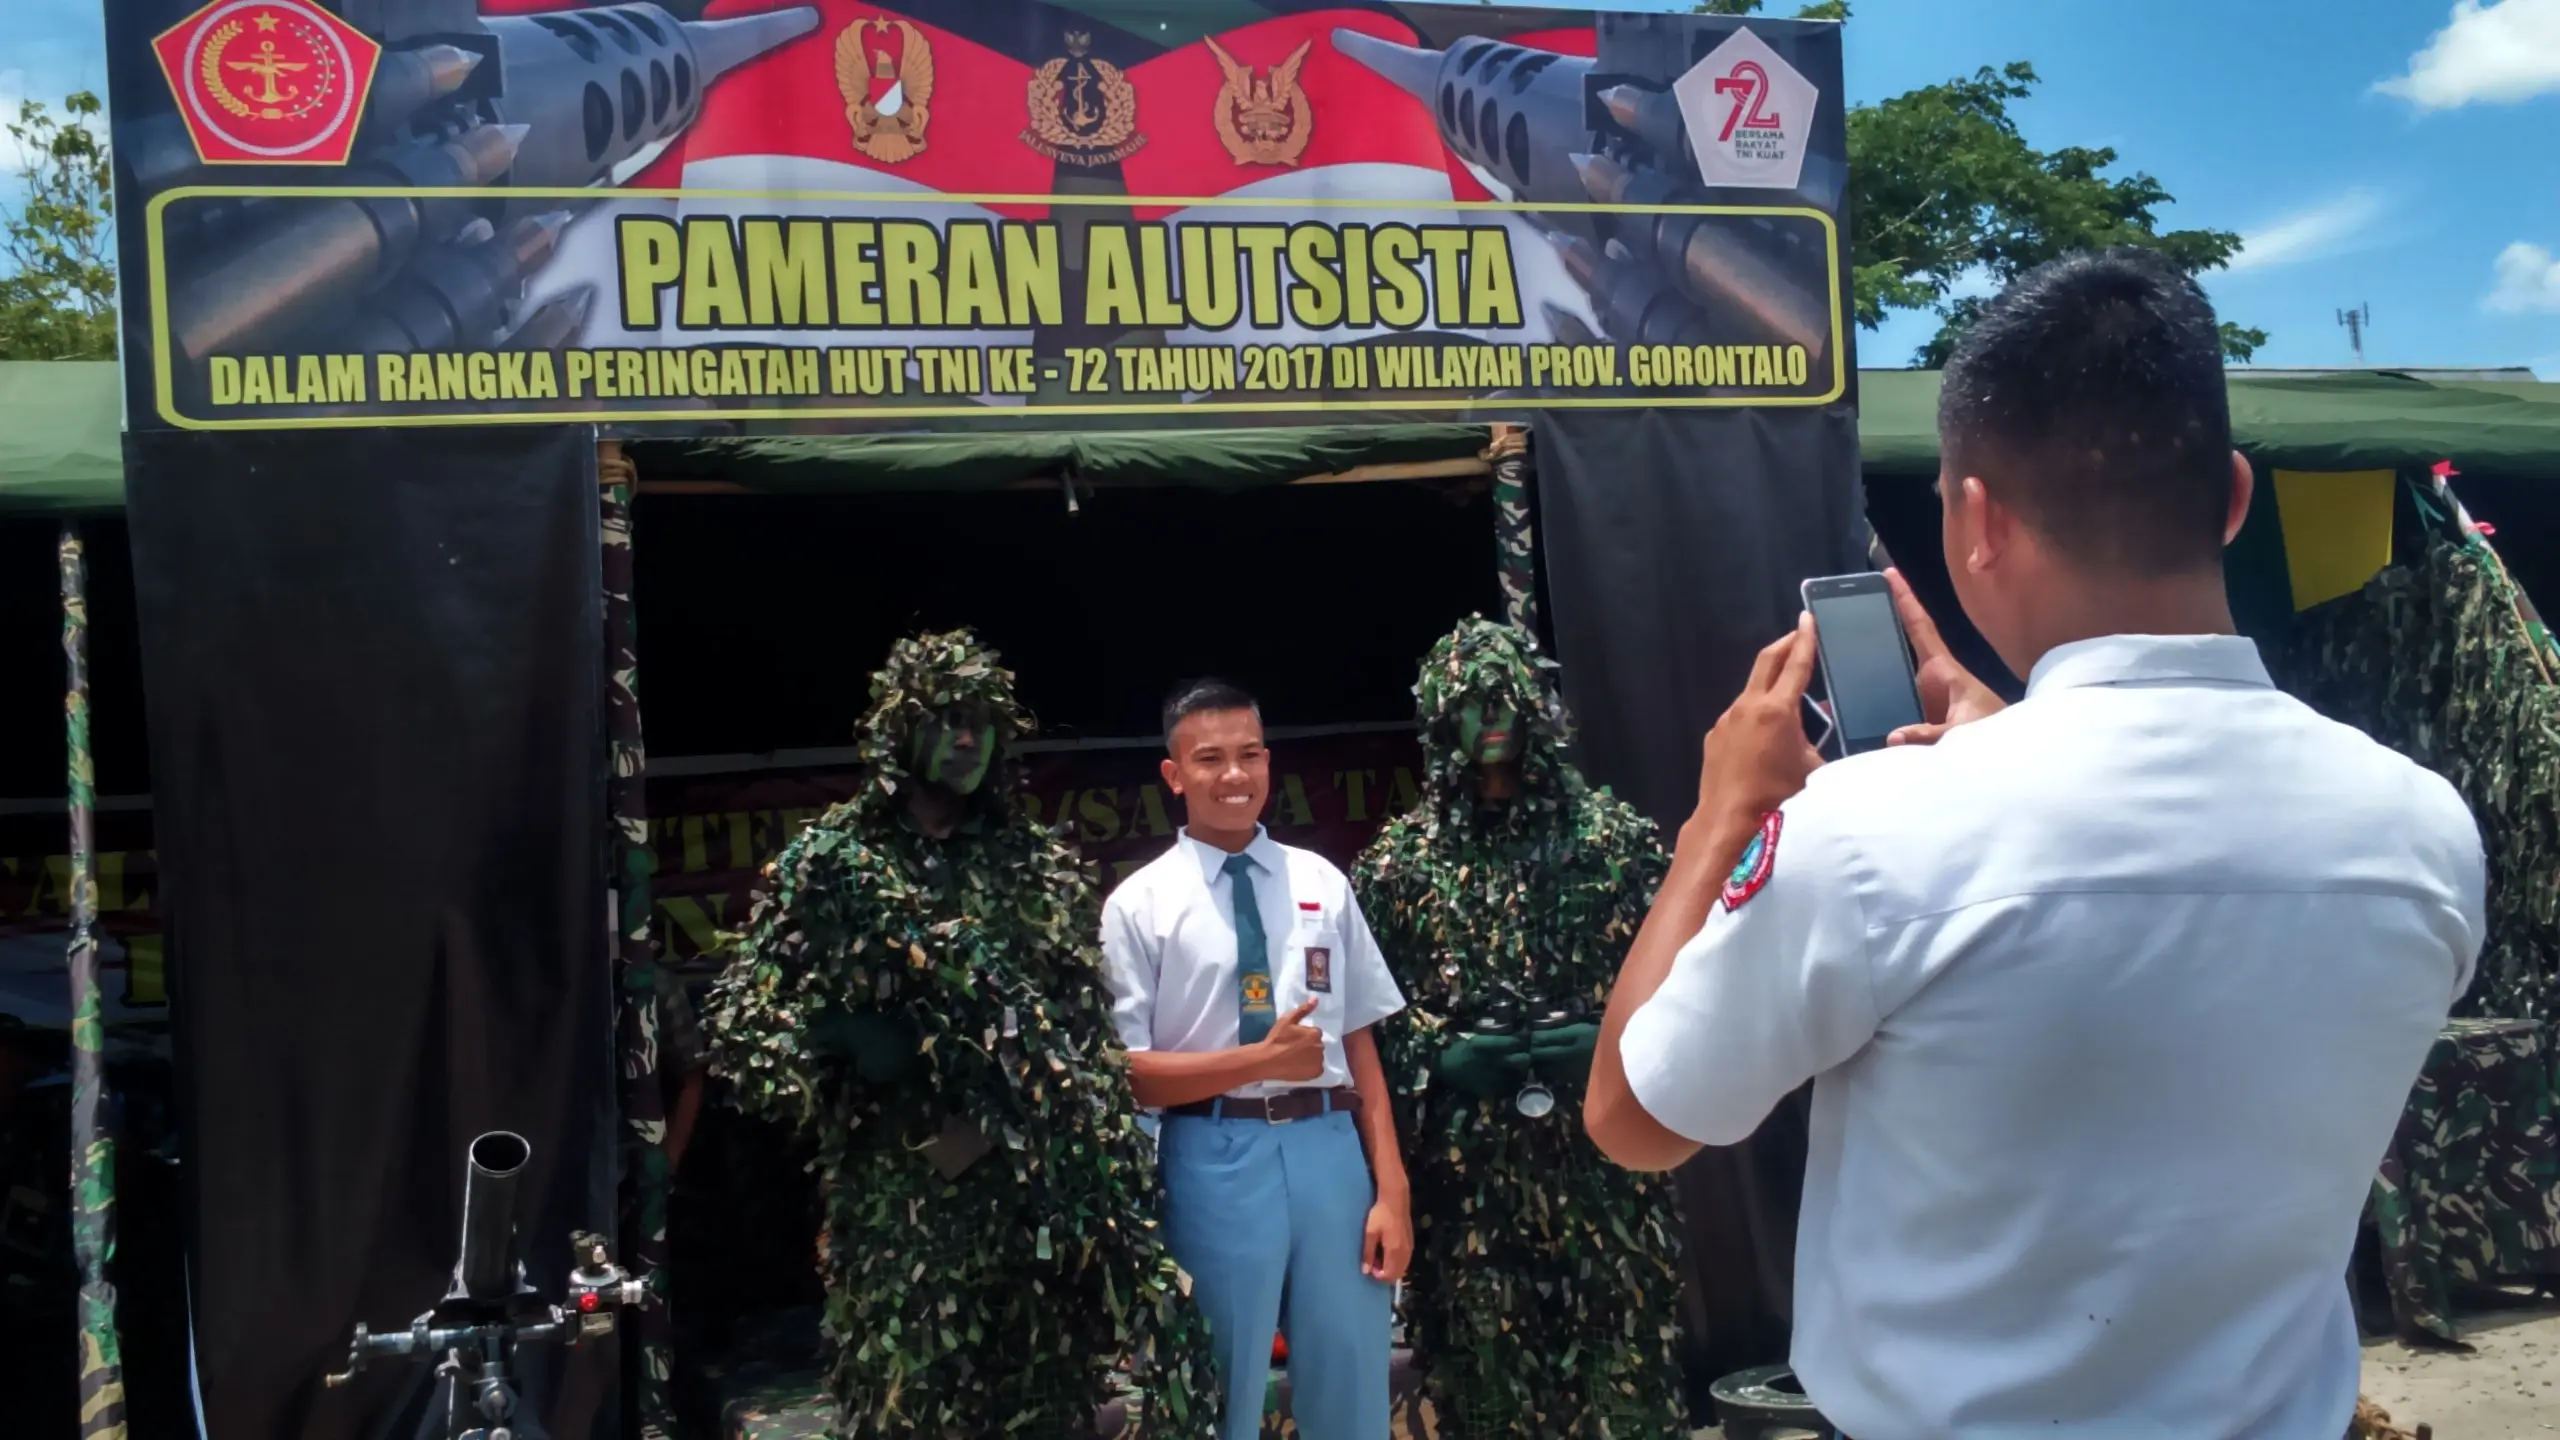 Sejumlah siswa berfoto bersama prajurit saat pameran alusista di peringatan HUT ke-72 TNI di Gorontalo. (Liputan6.com/Aldiansyah Mochammad Fachrurrozy)